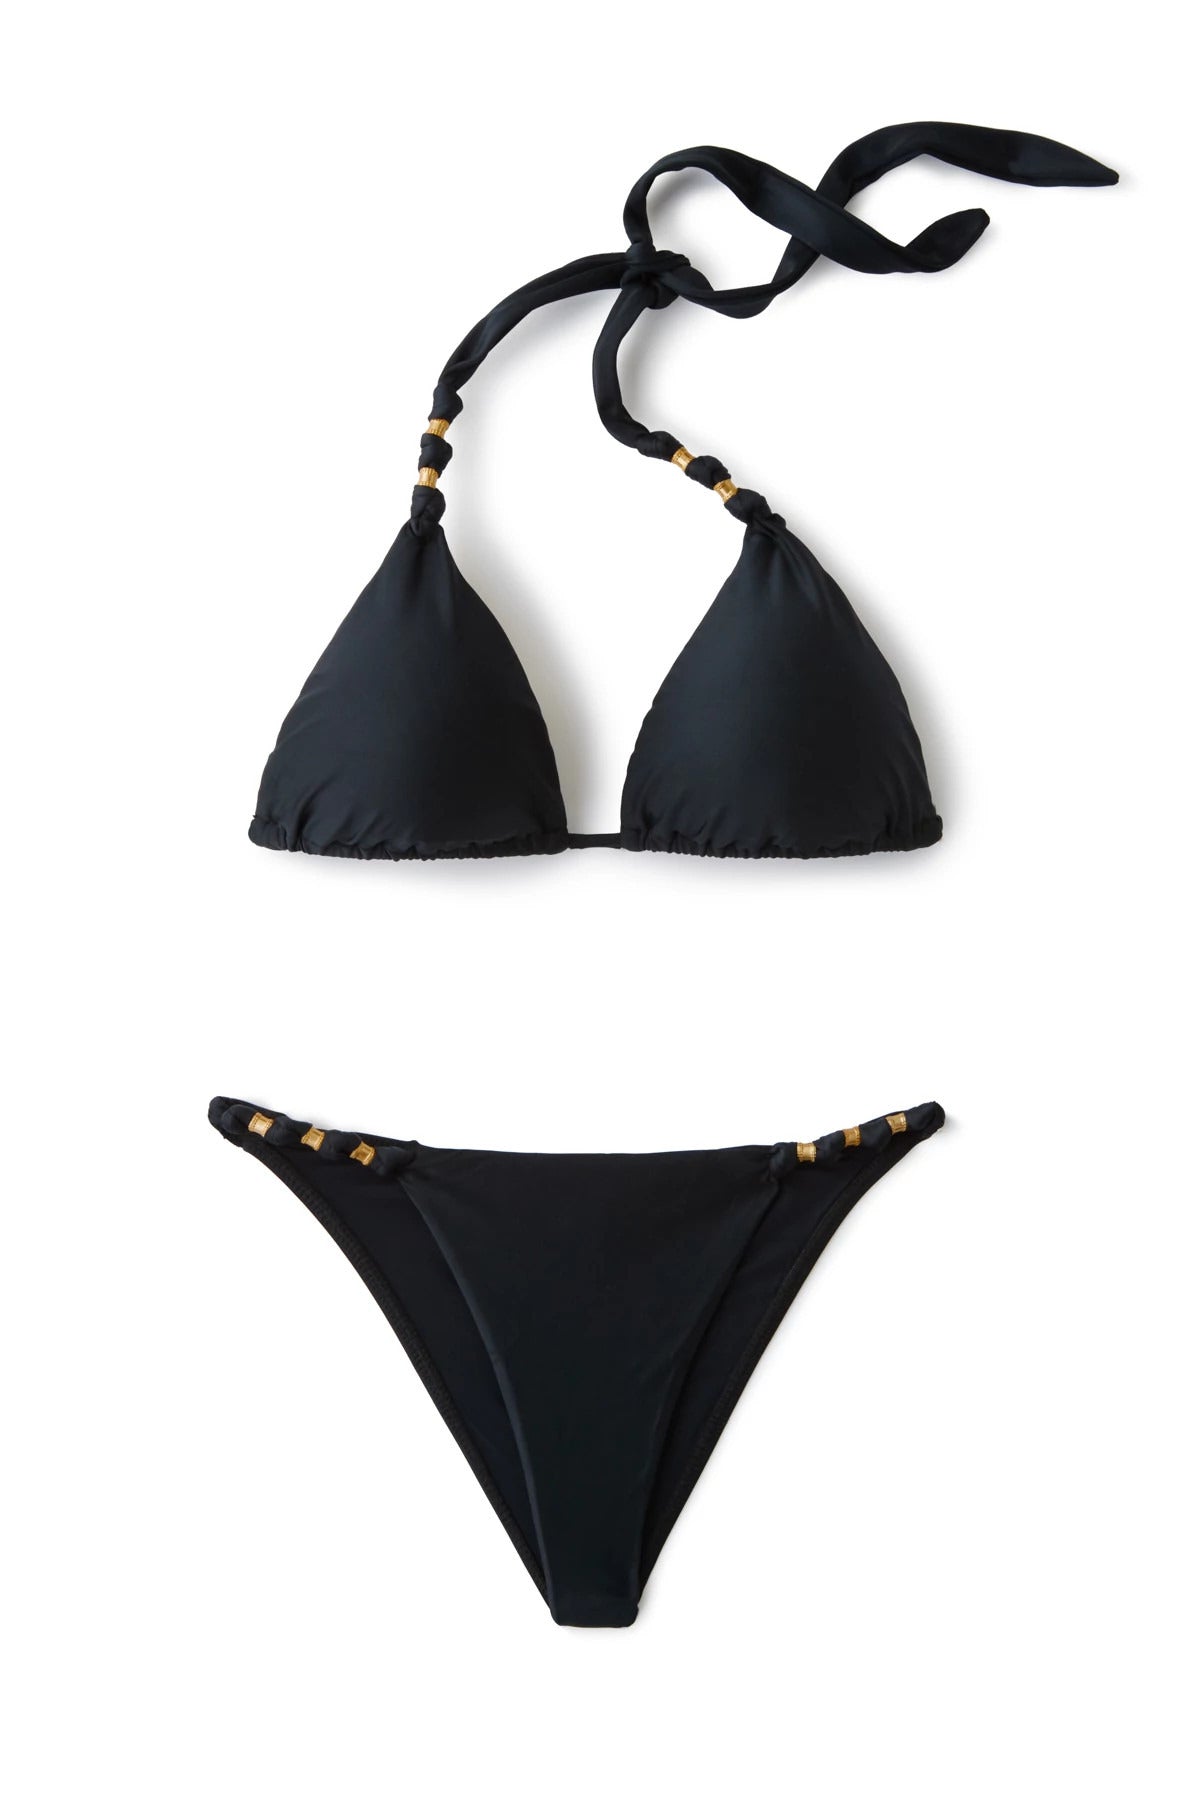 Vix Swimwear Women's Black Sliding Triangle Bikini Top